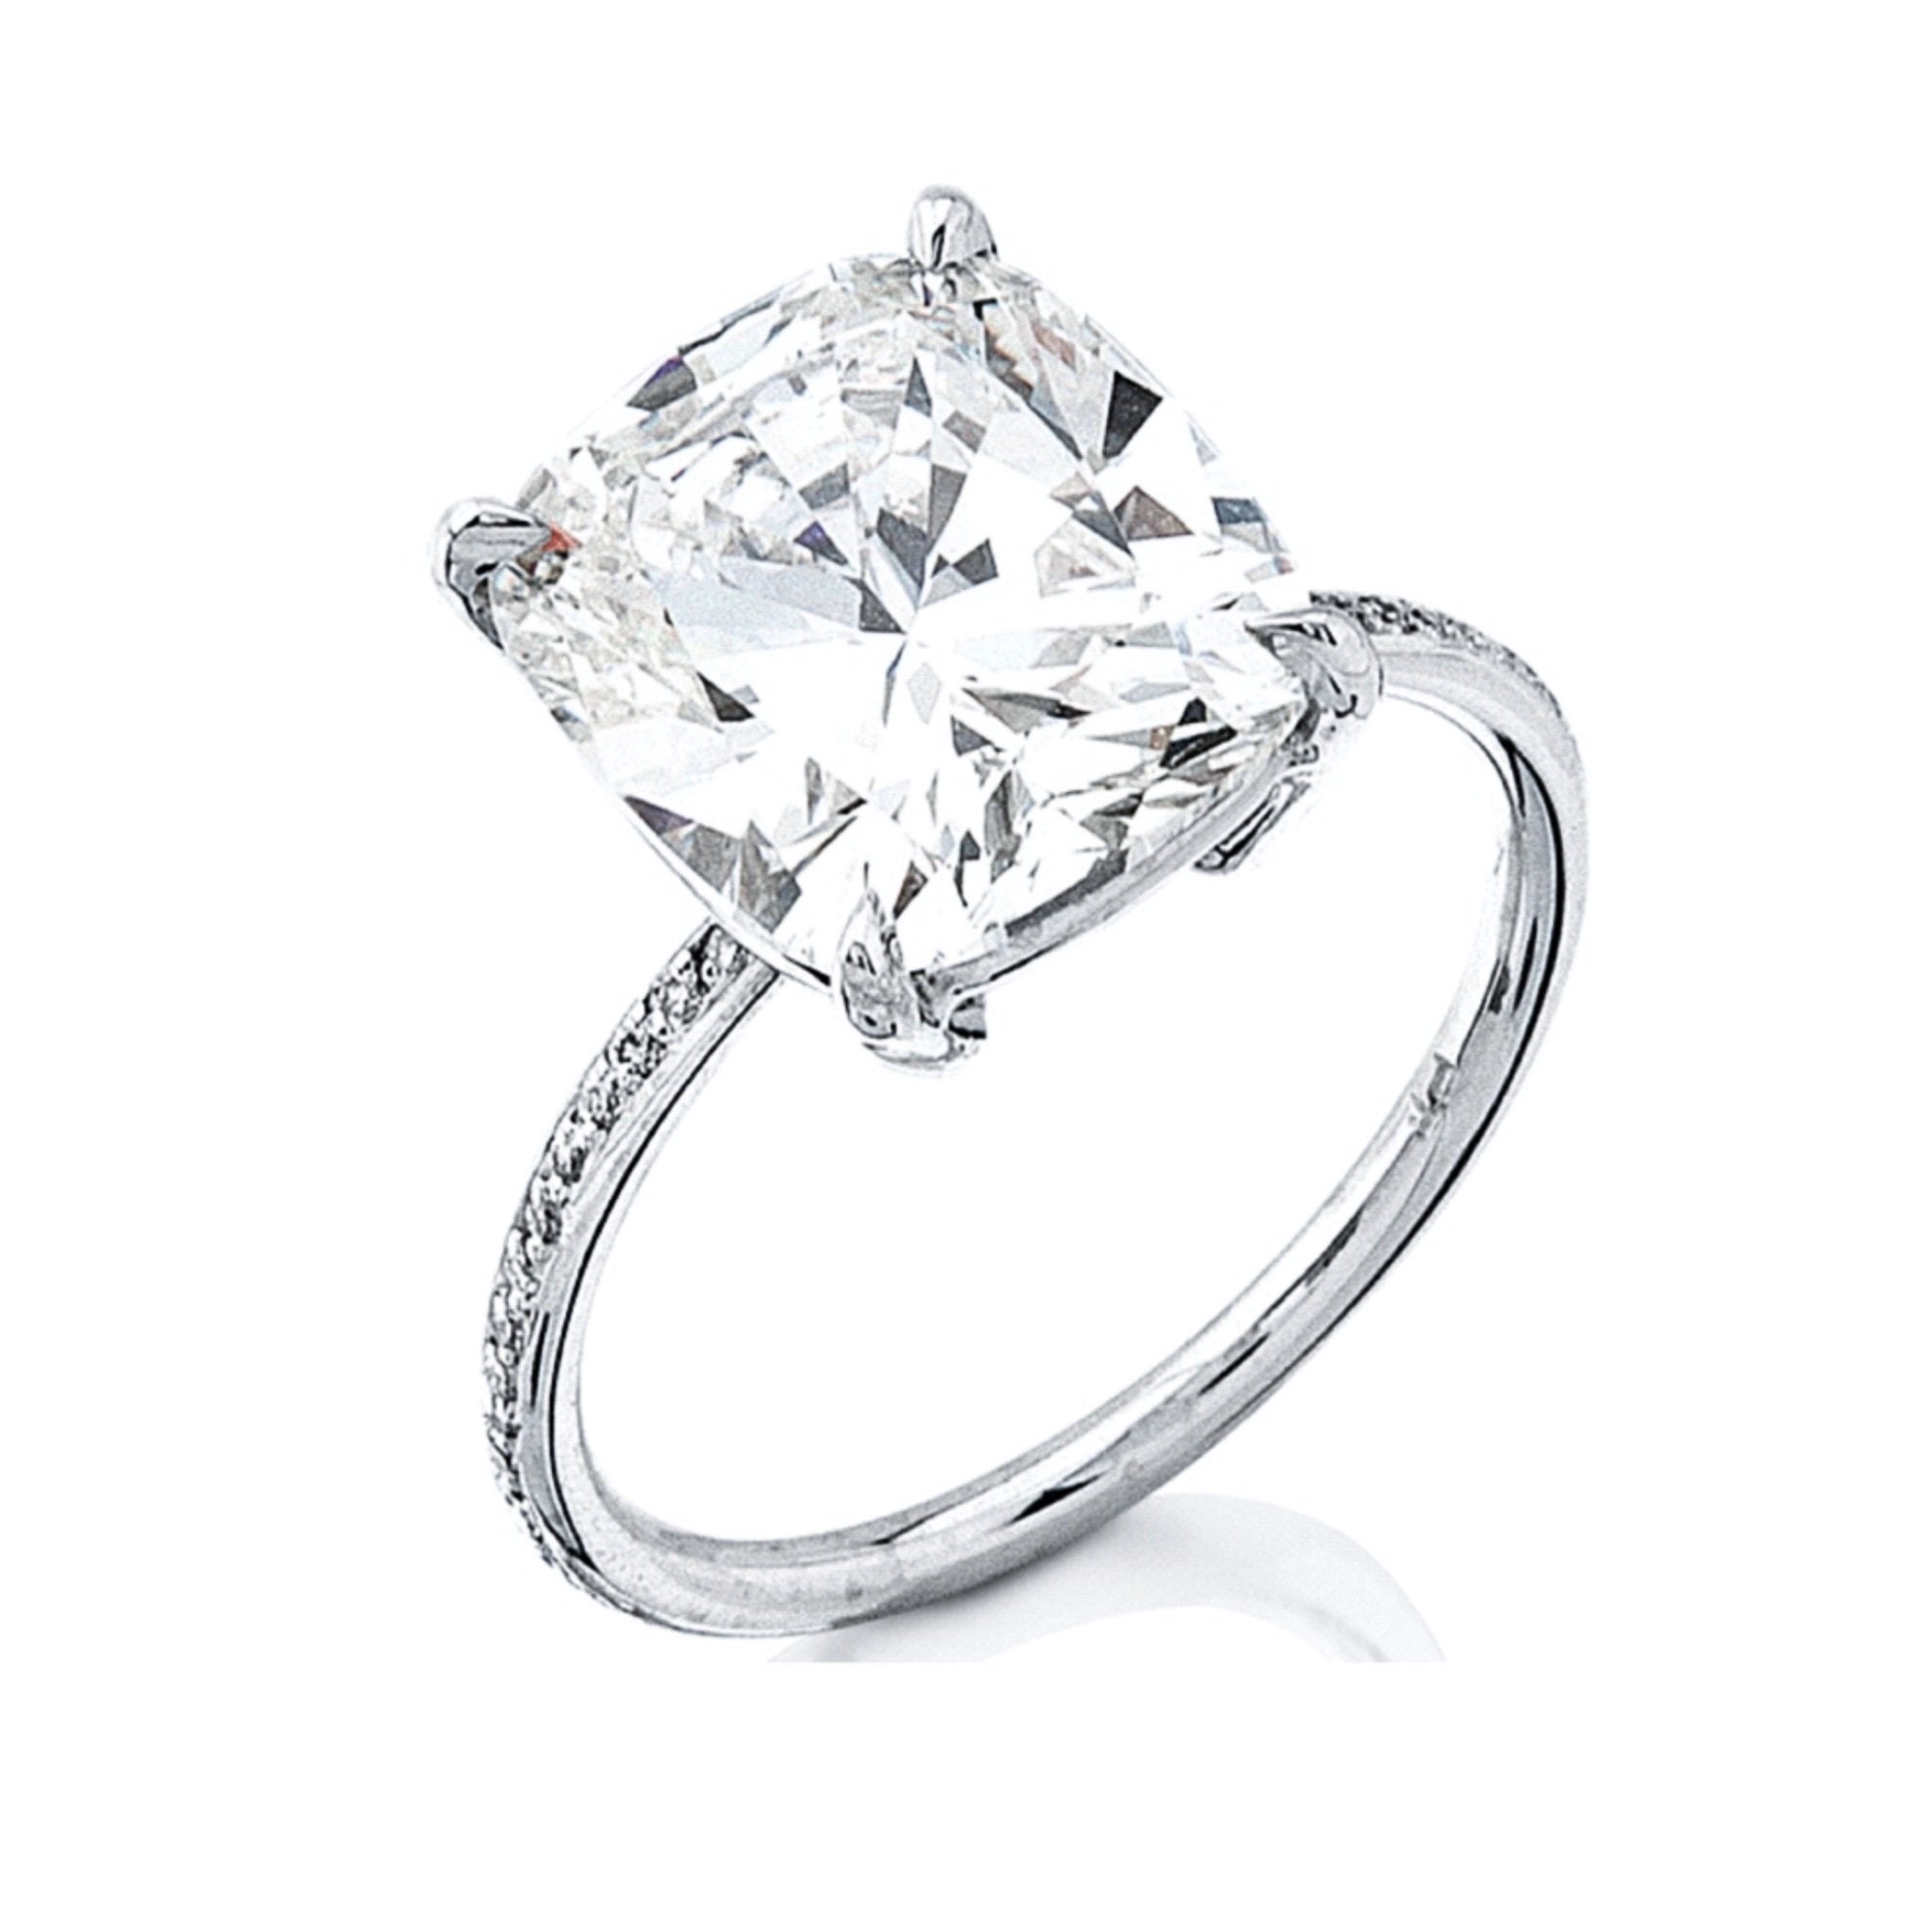 Nikki Bella's 5-Carat Engagement Ring: All the Details